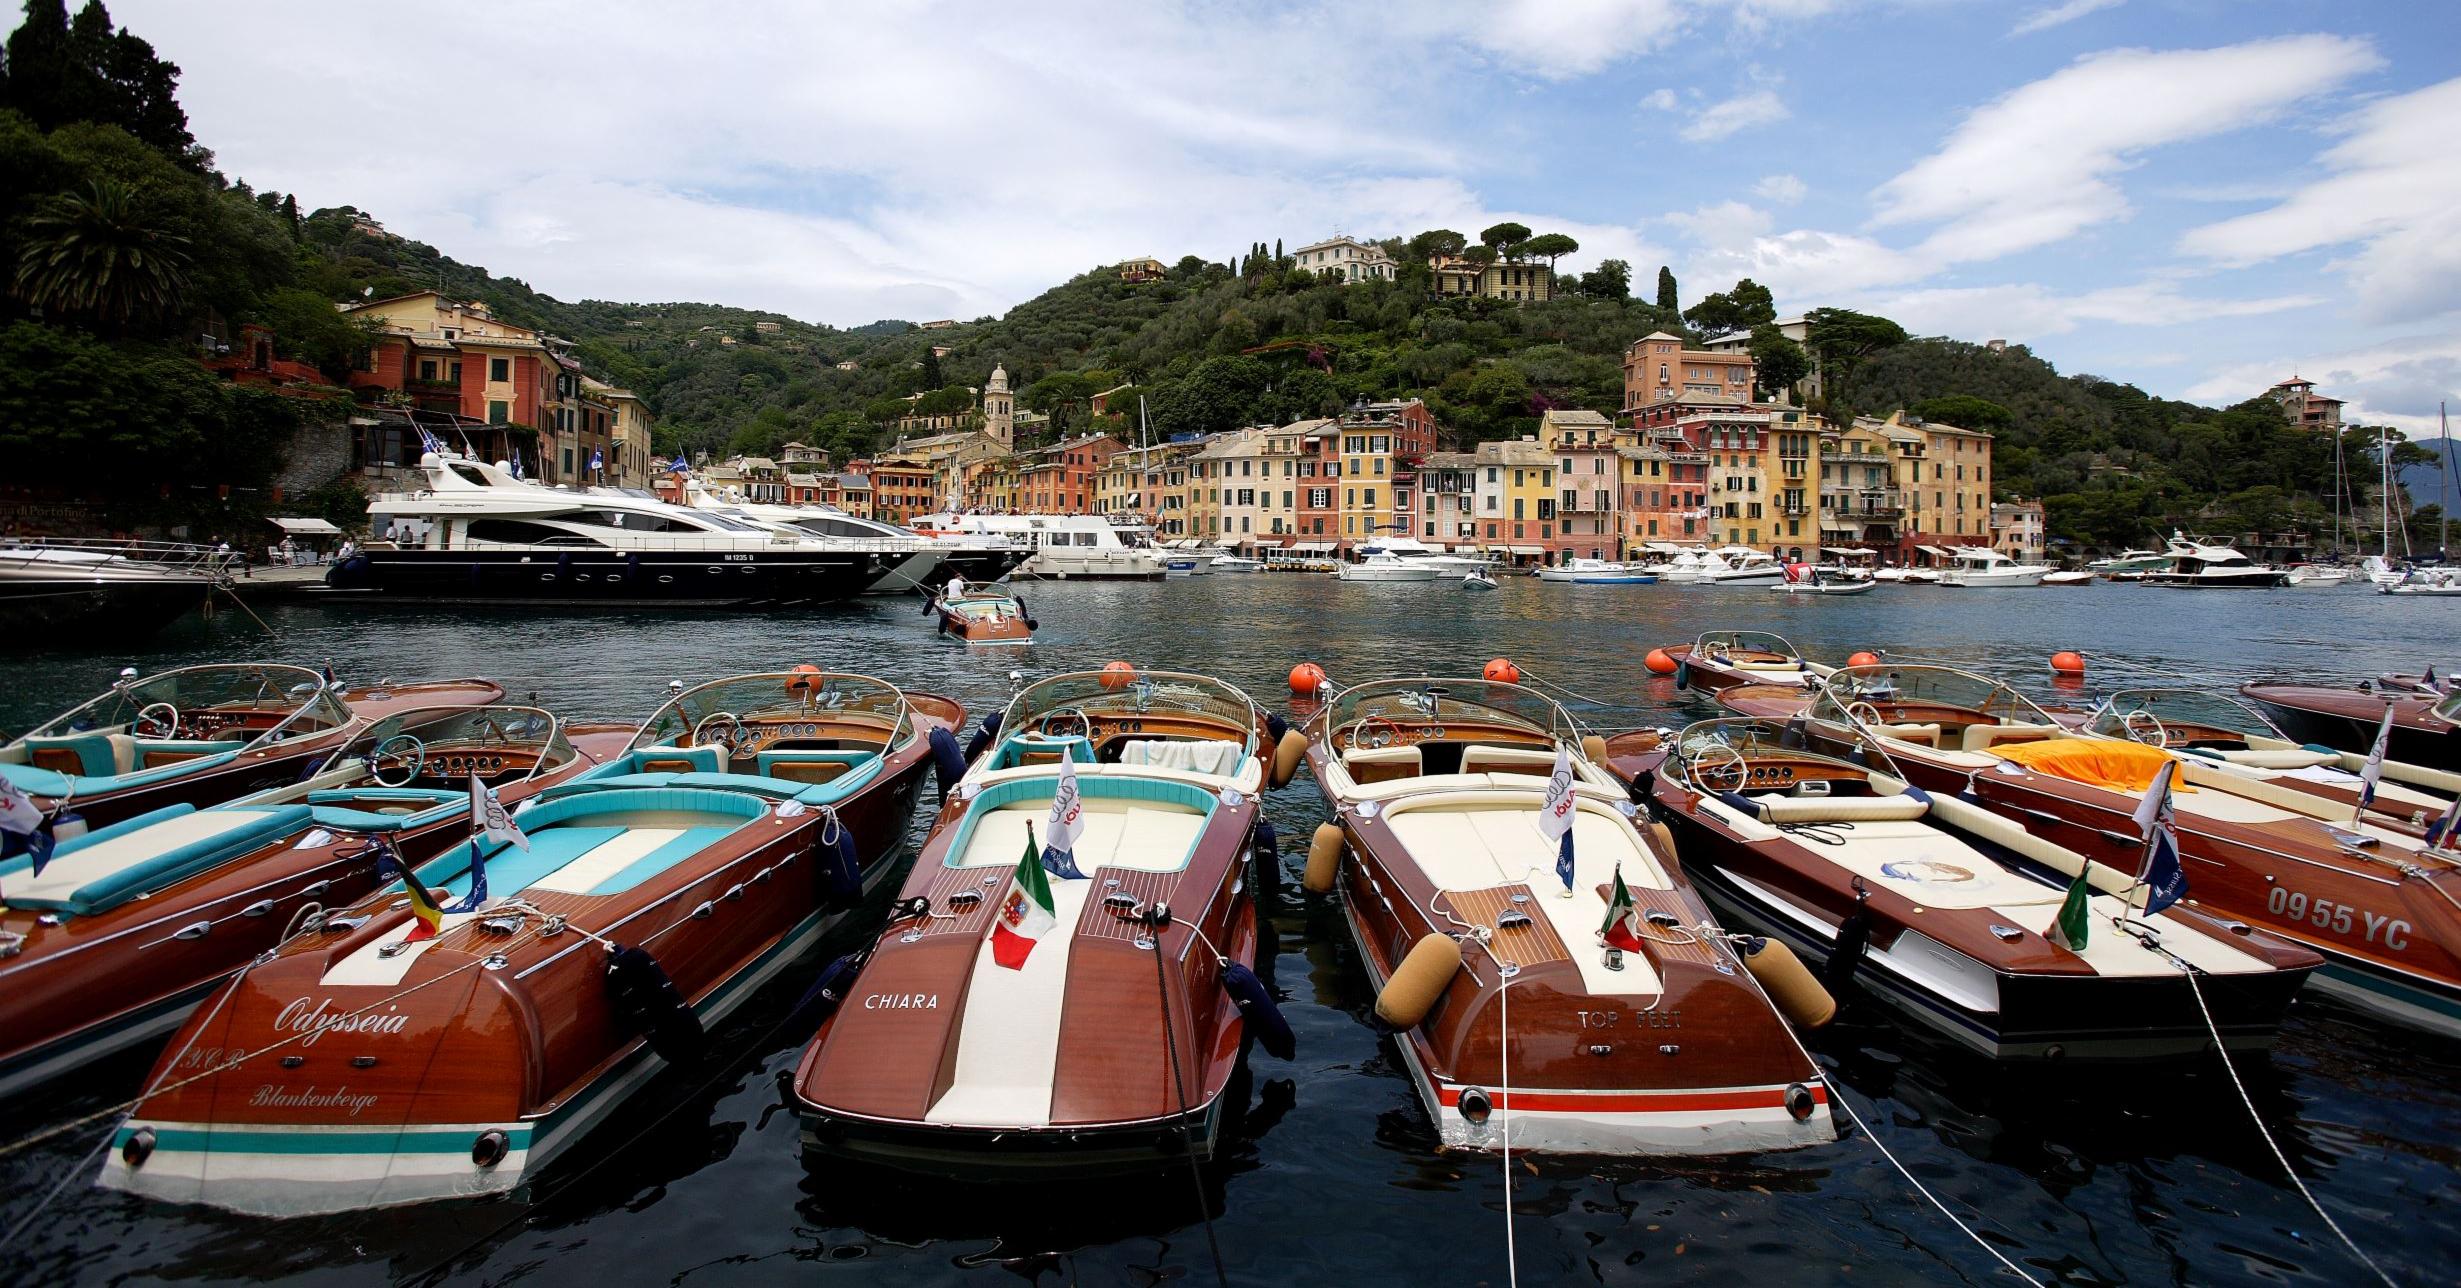 top italian yacht brands